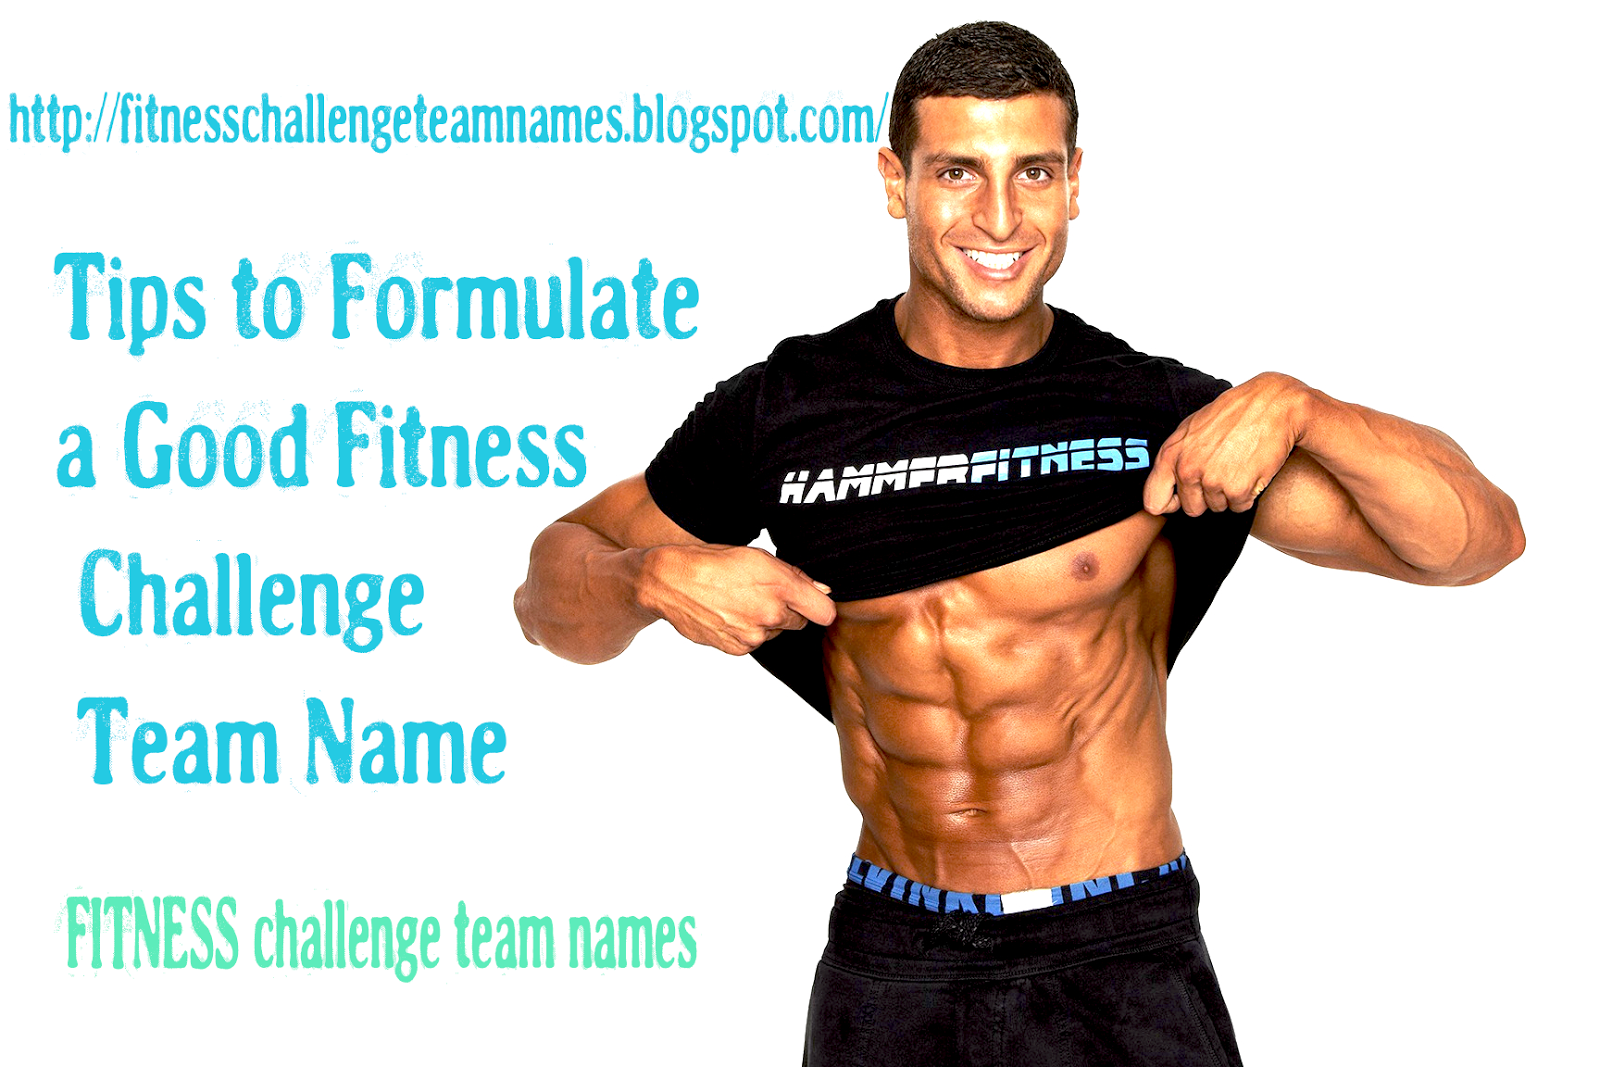  fitness challenge team names 